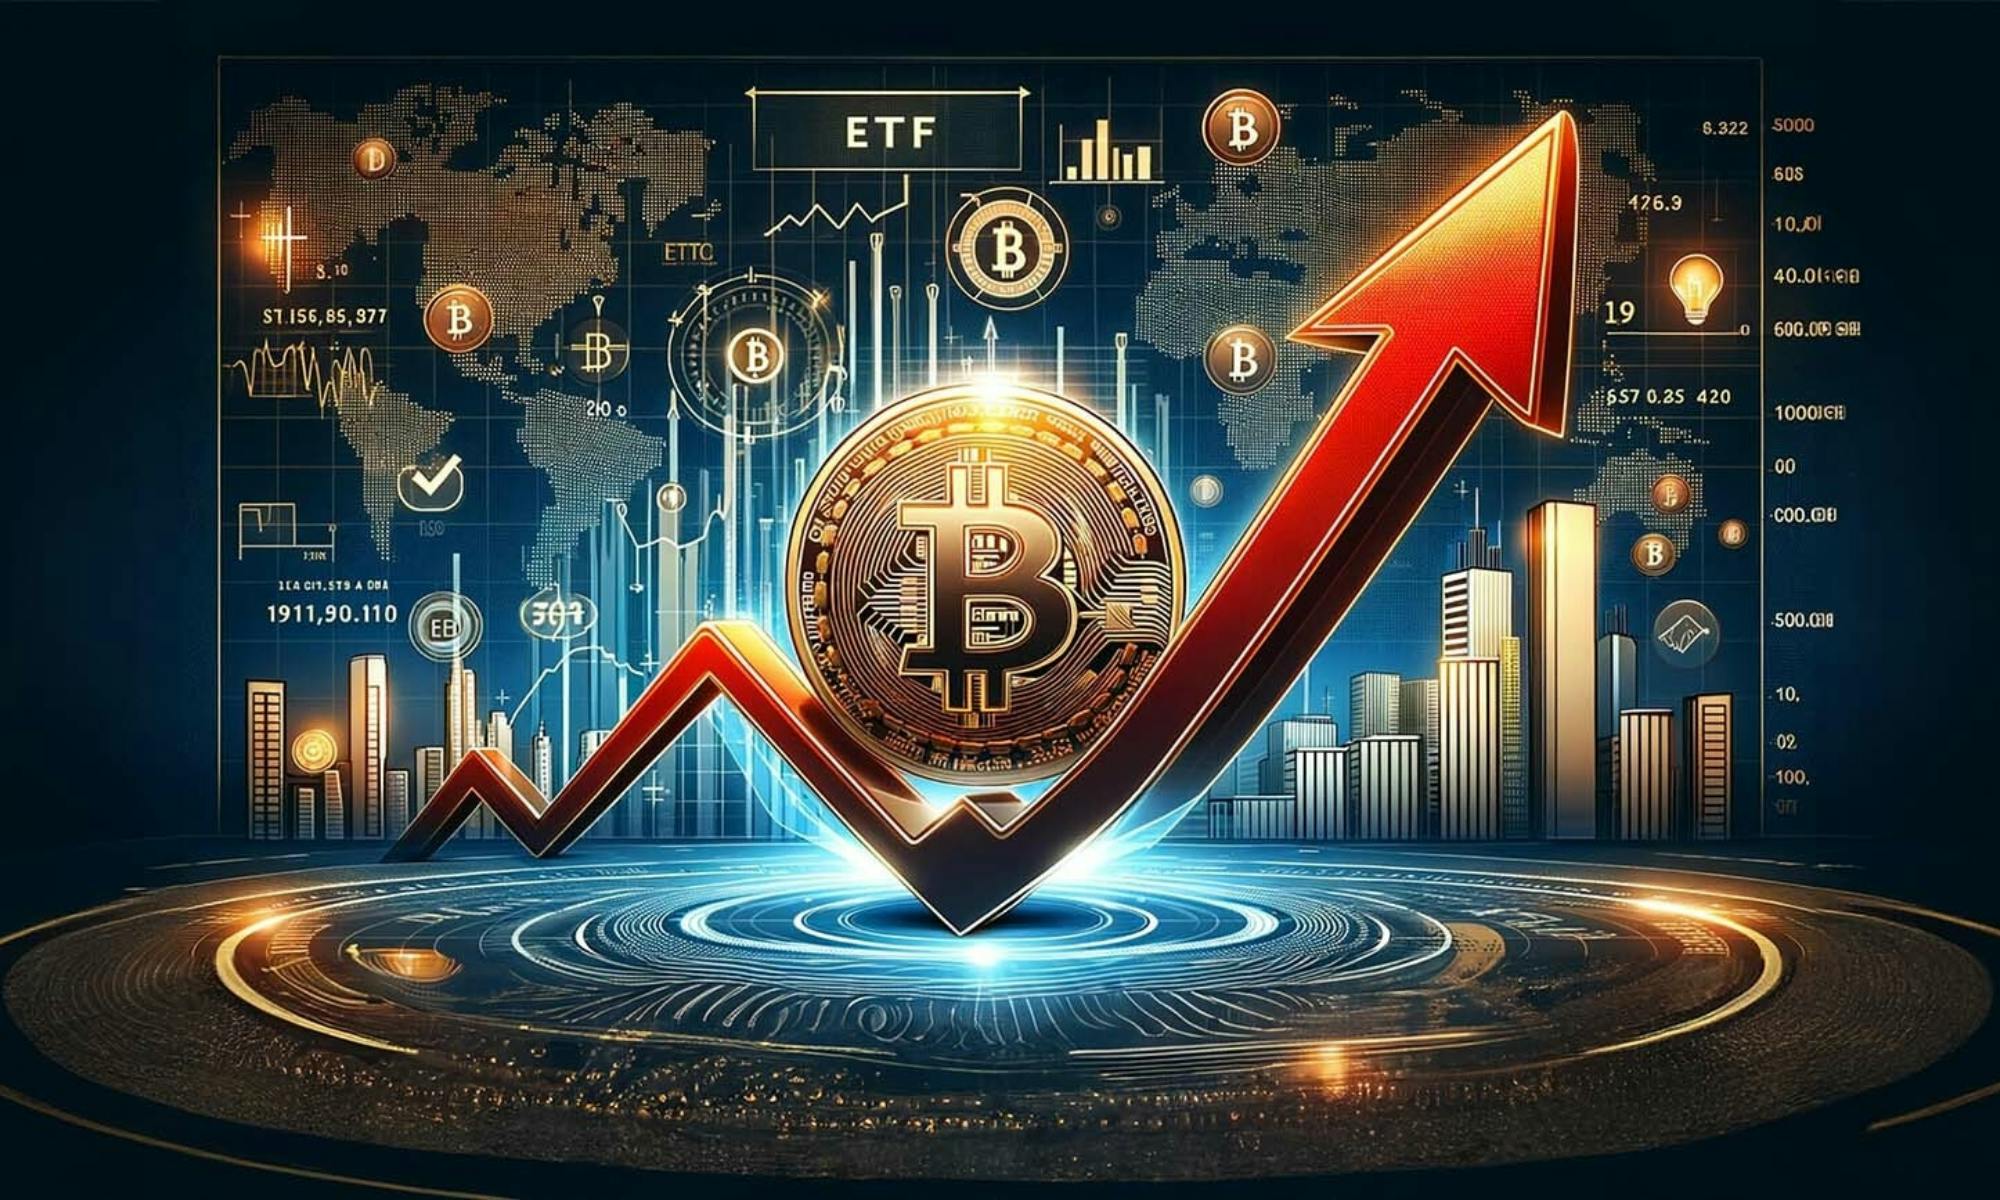 Bitcoin’s Dip a Normal Market Dynamic